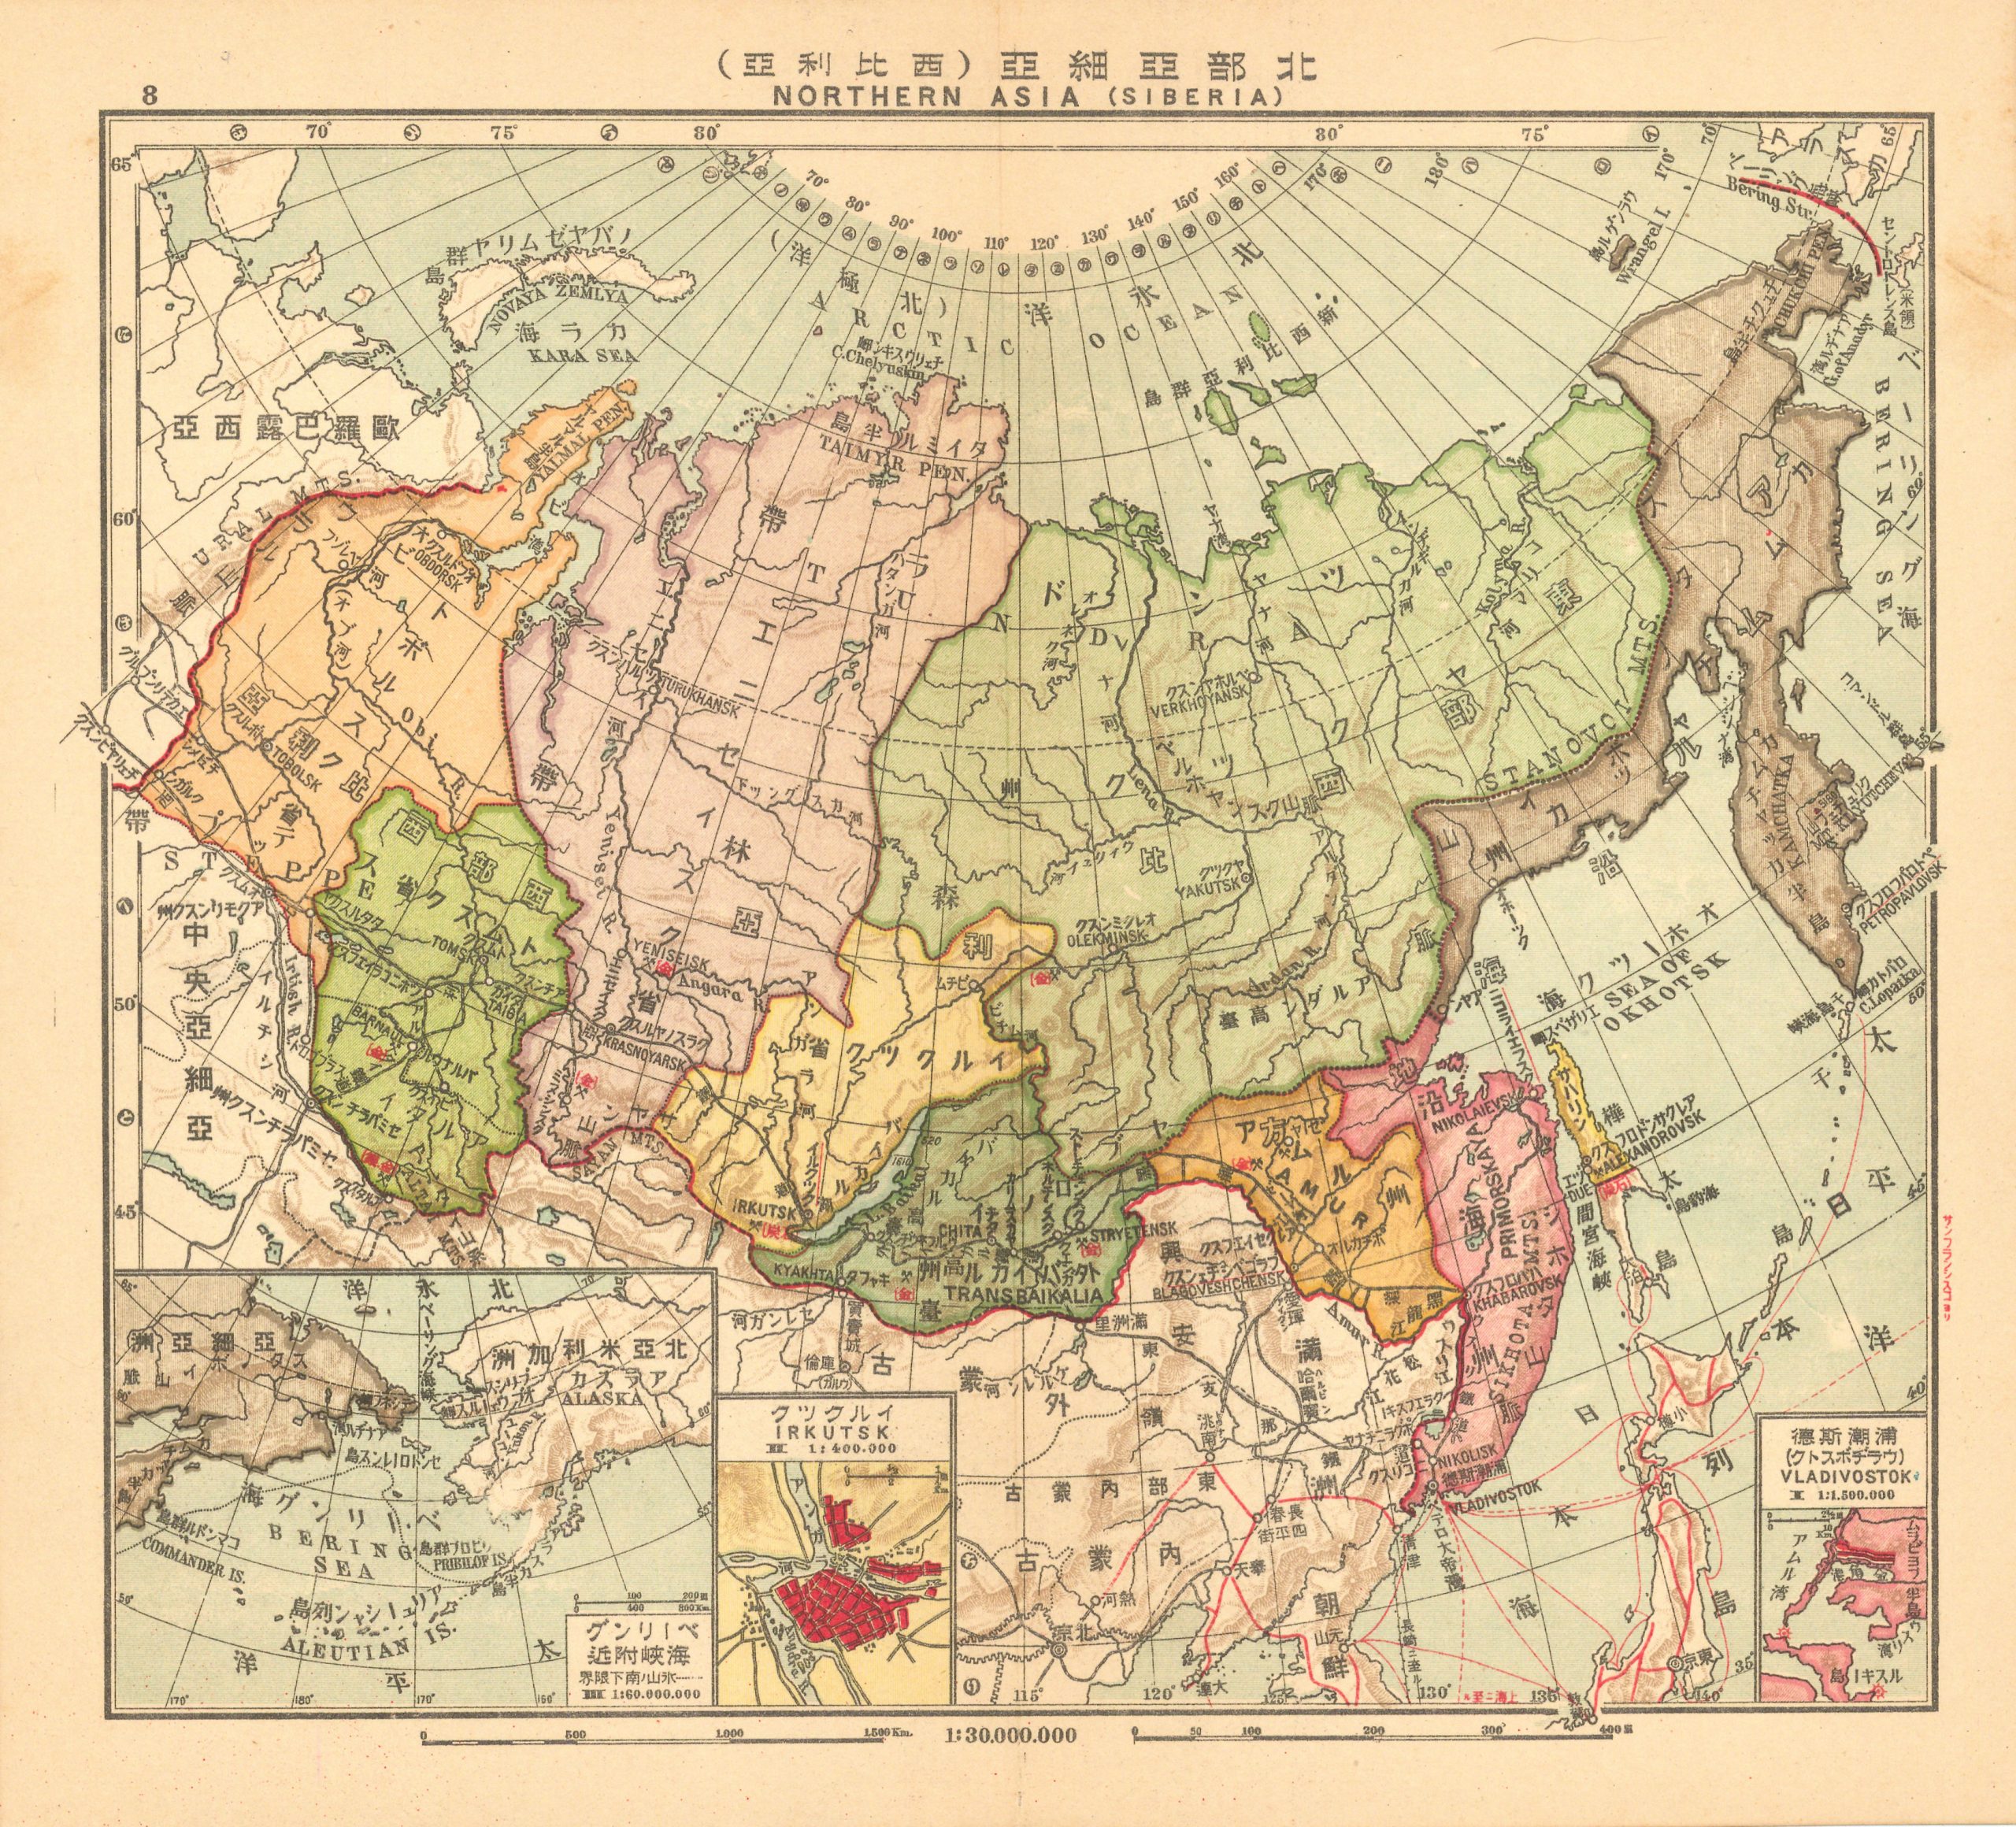 Kaiseikwan's 1920 Map of Northern Asia (Siberia) - Art Source International